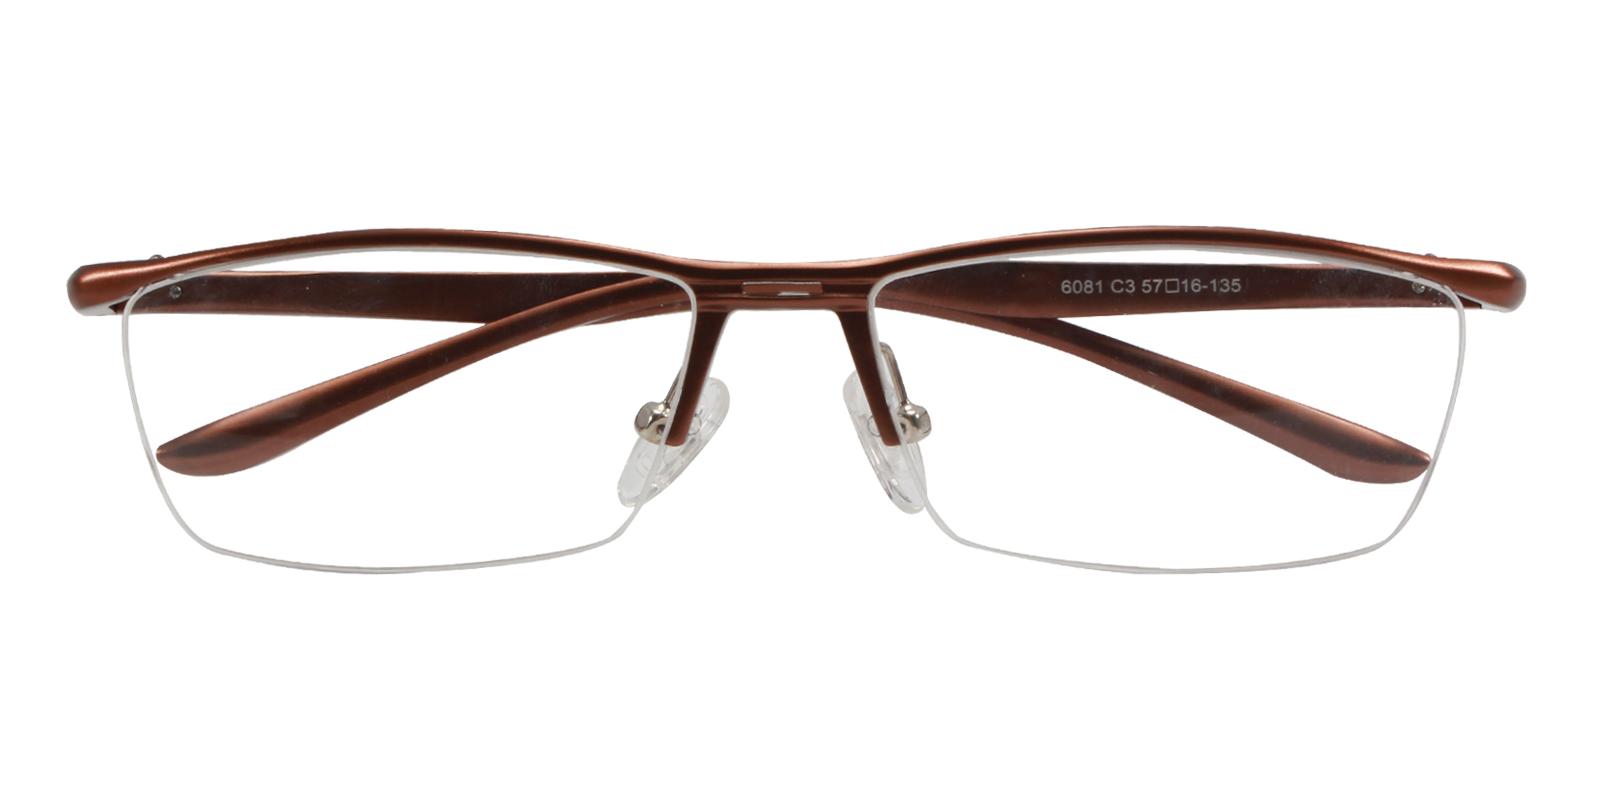 Stardust Brown Metal NosePads , SportsGlasses , SpringHinges Frames from ABBE Glasses